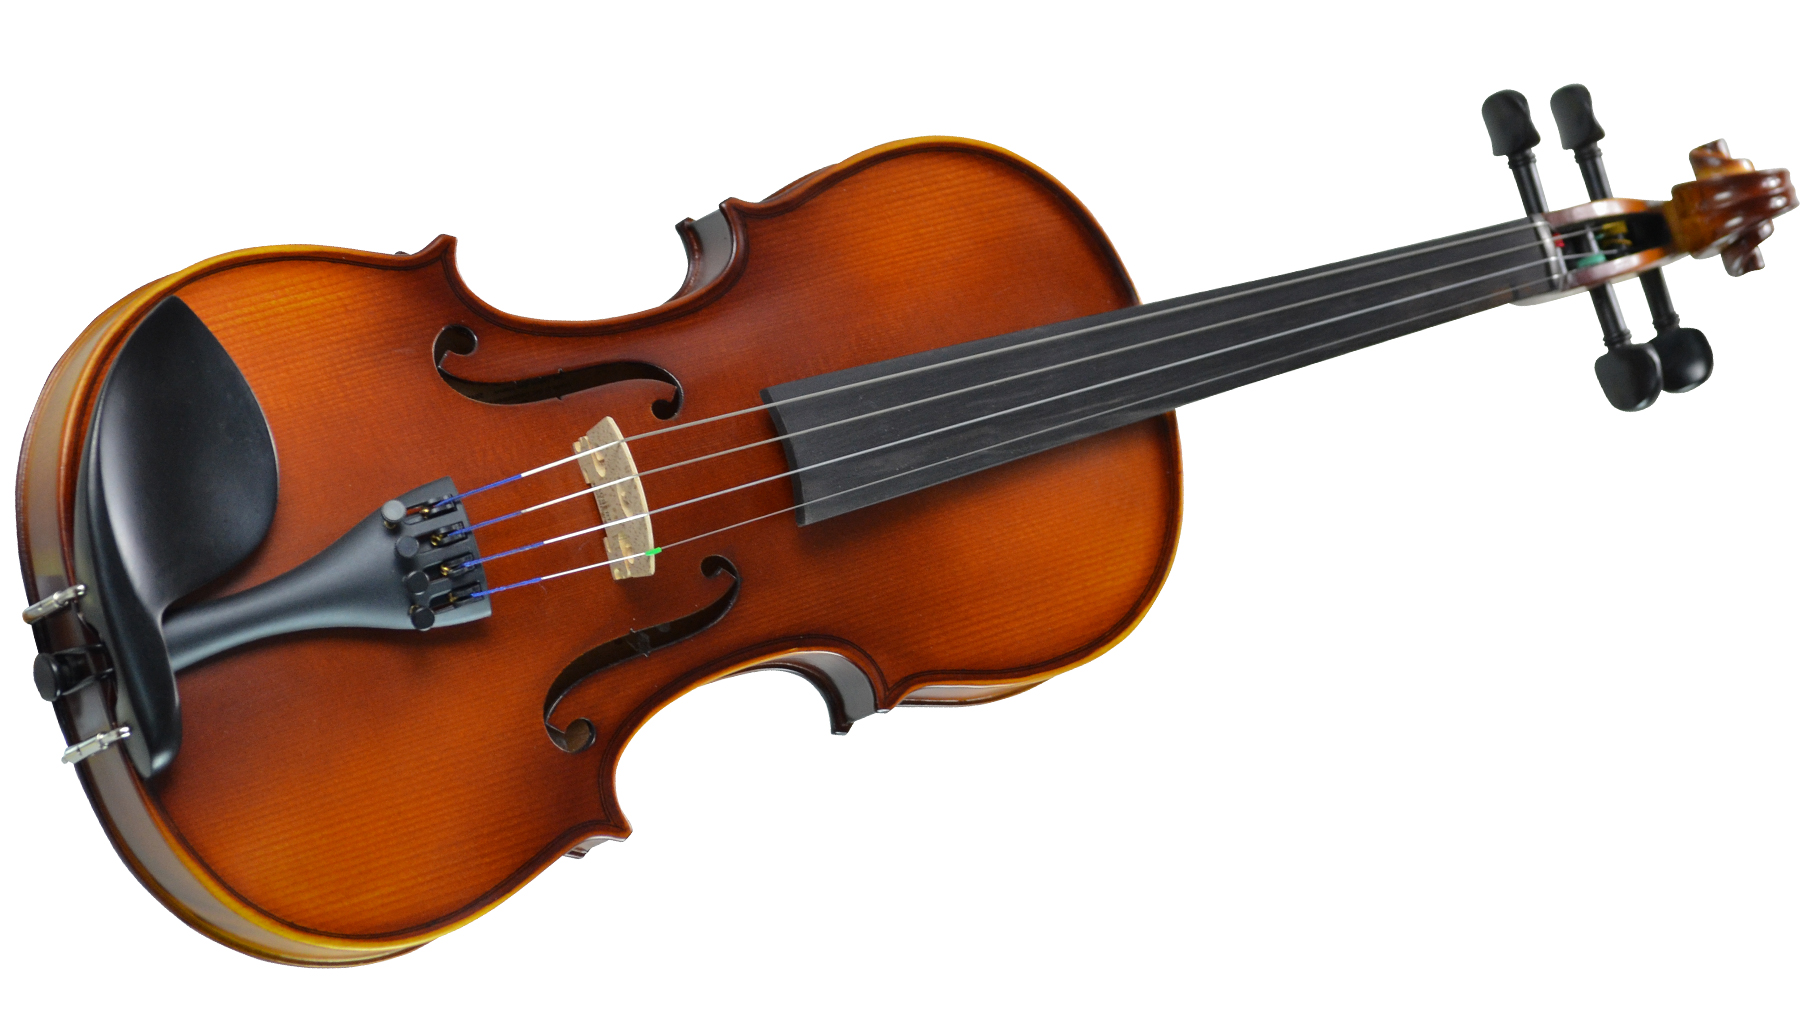 Bunnel G1 Violin - Ricard Bunnel